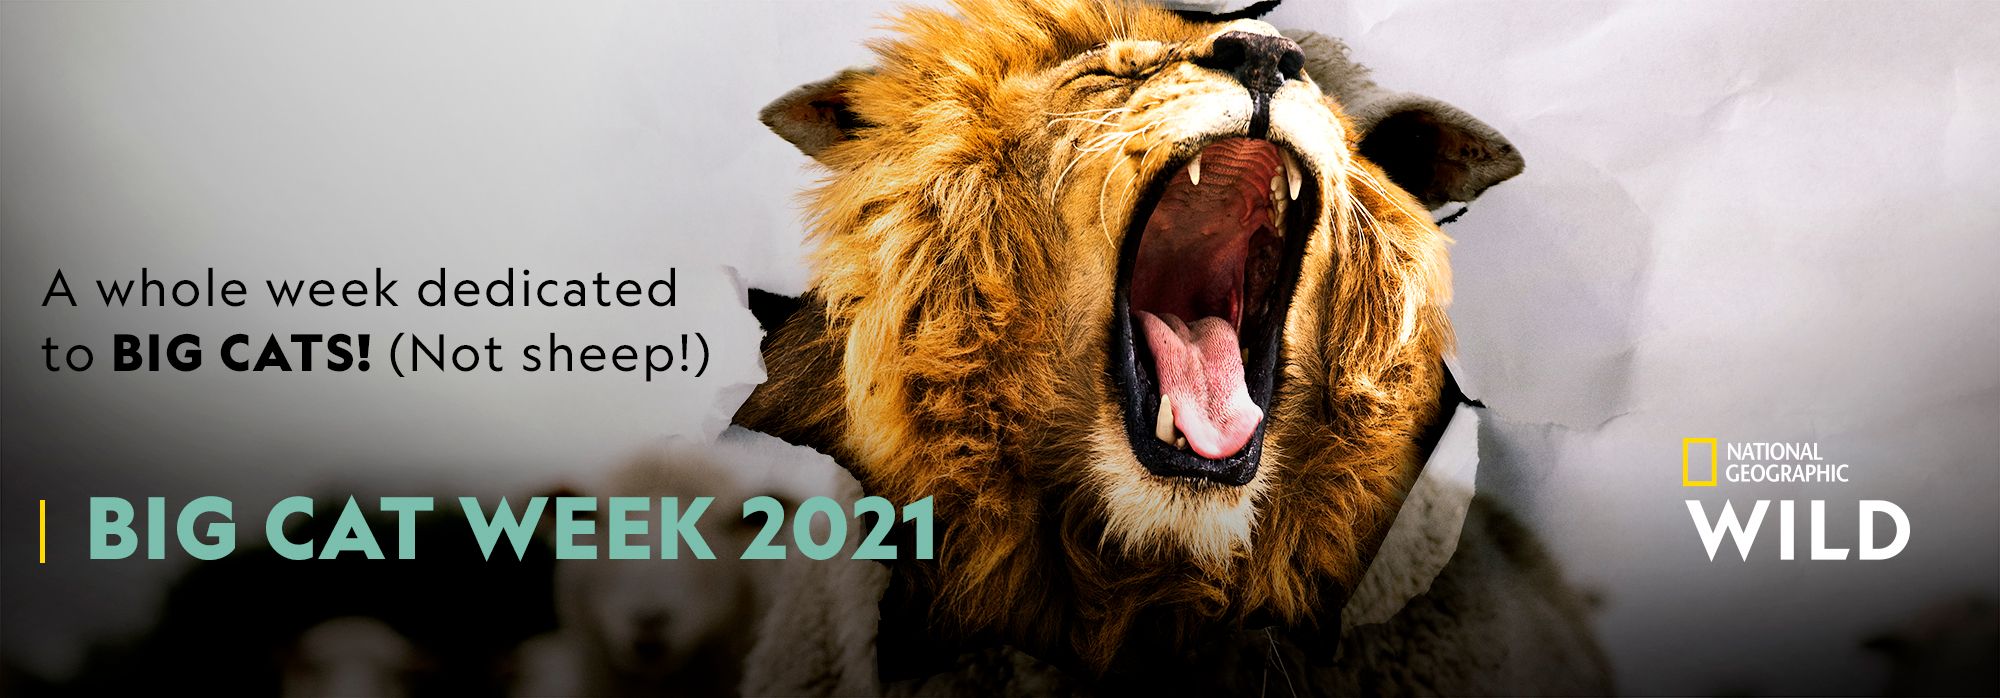 Big Cat Week 2021 National Geographic